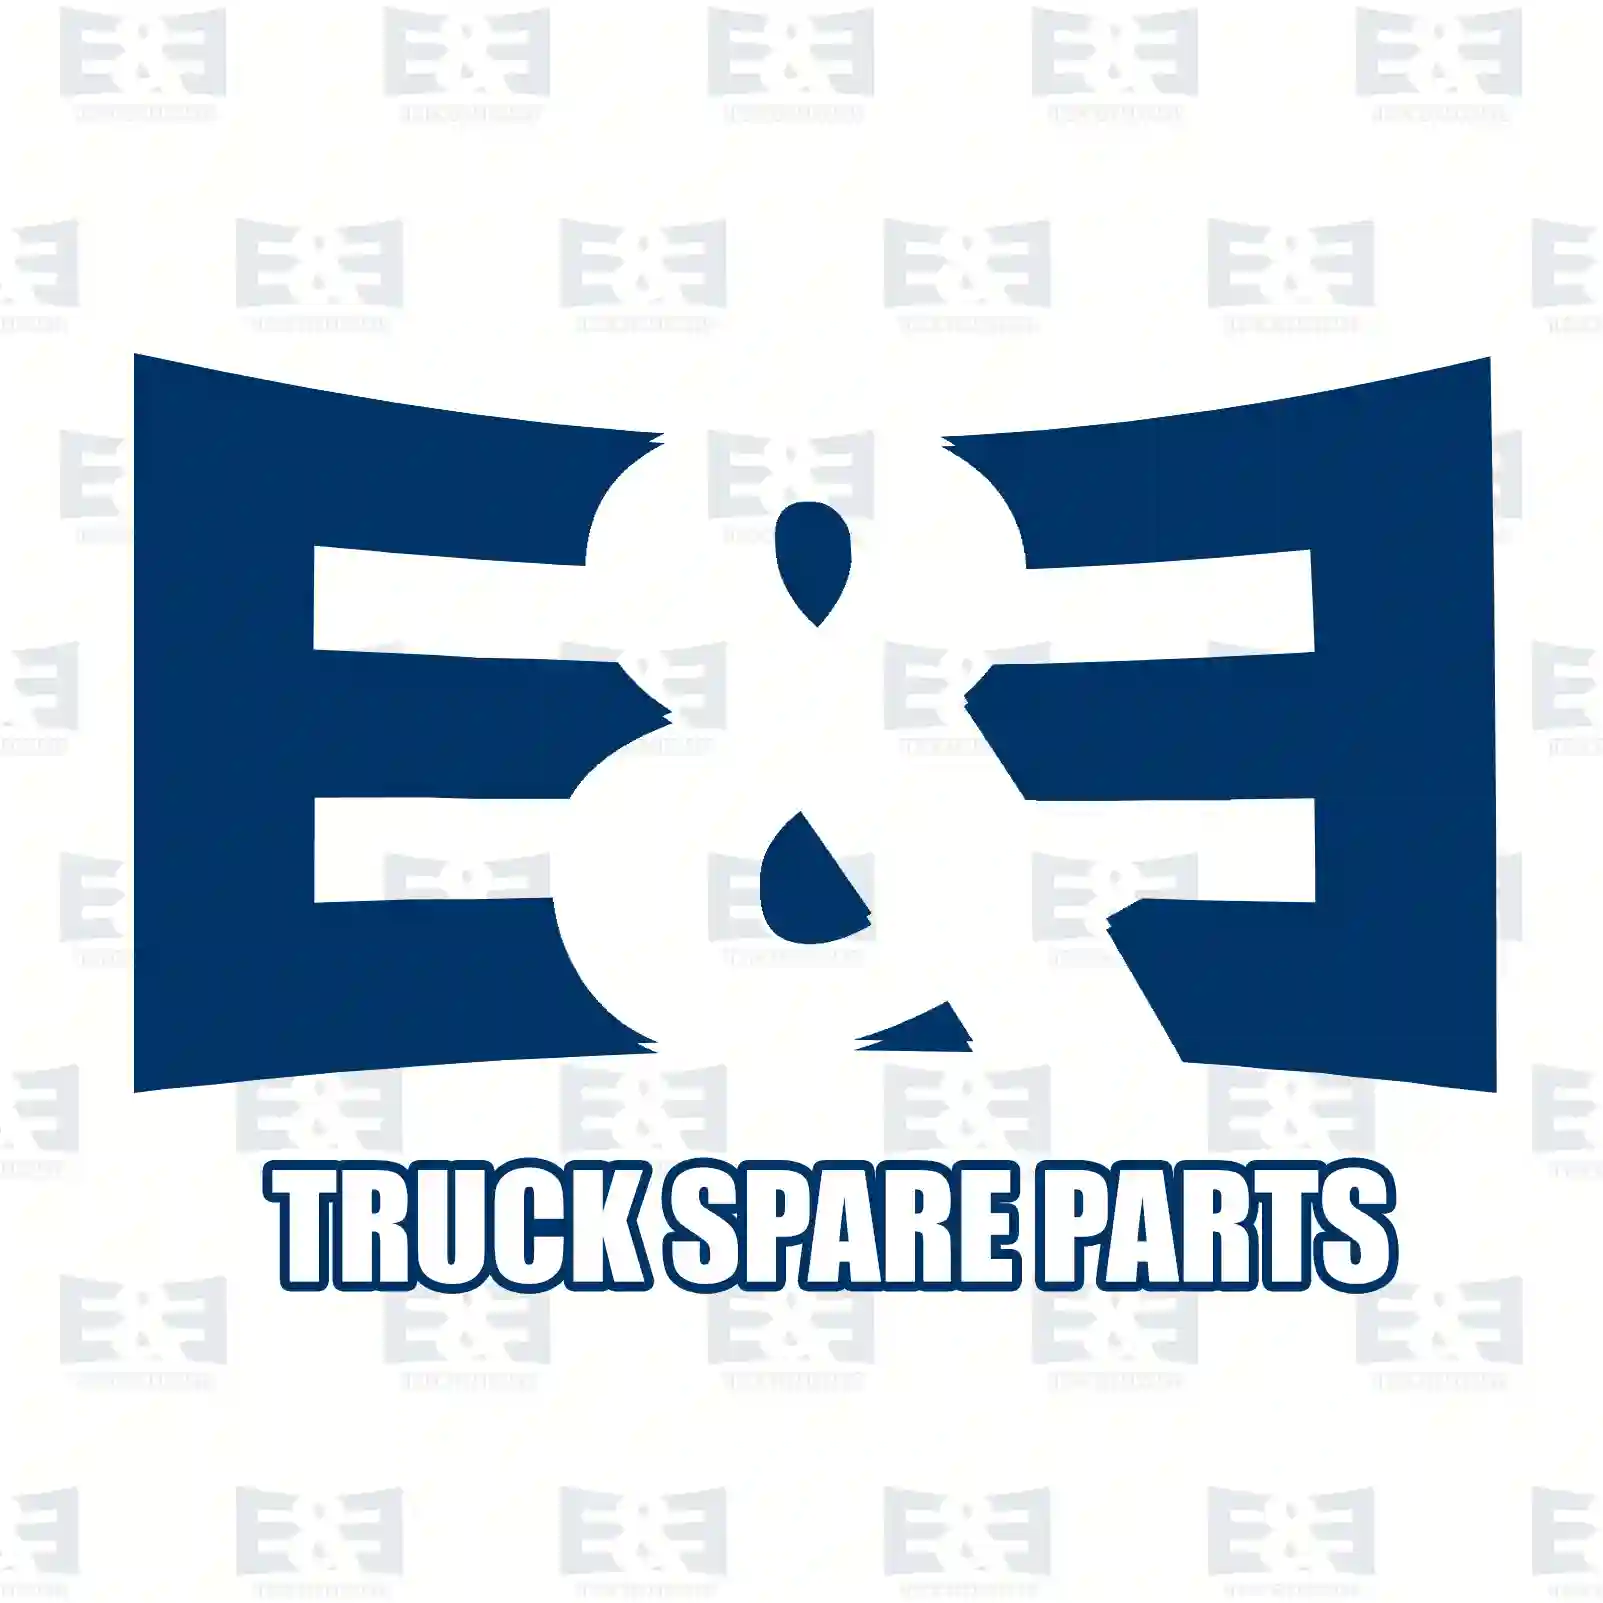 Joint cross, non maintenance-free, 2E2276760, 42533841, 42549279, 42559764, 93160228, ZG30679-0008 ||  2E2276760 E&E Truck Spare Parts | Truck Spare Parts, Auotomotive Spare Parts Joint cross, non maintenance-free, 2E2276760, 42533841, 42549279, 42559764, 93160228, ZG30679-0008 ||  2E2276760 E&E Truck Spare Parts | Truck Spare Parts, Auotomotive Spare Parts